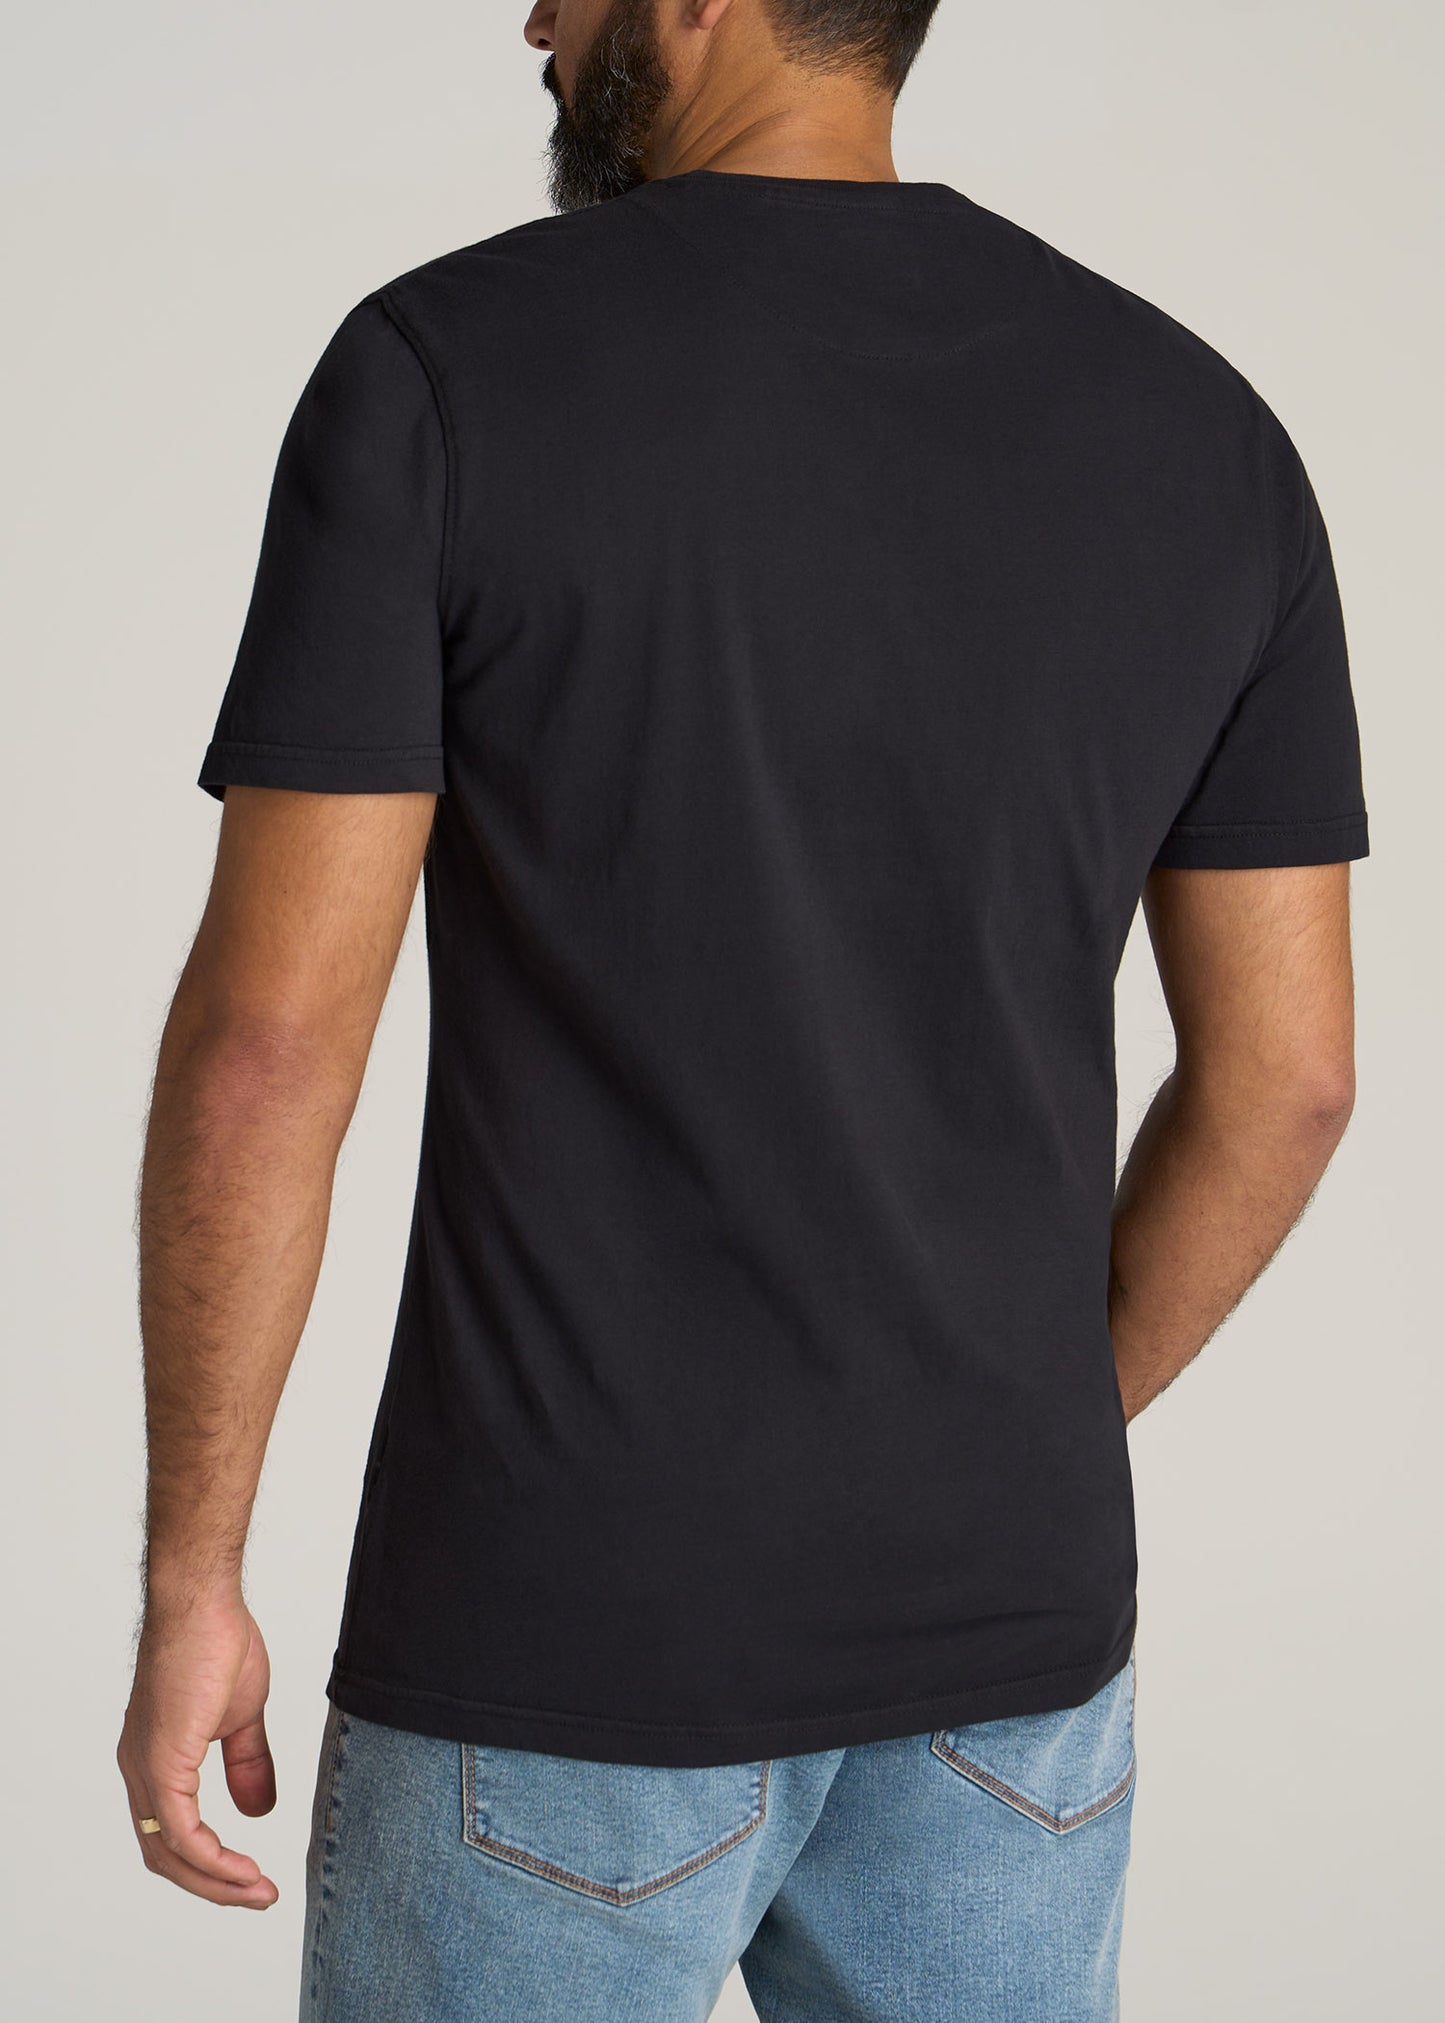 Regular Fit Crew-Neck T-shirt: LJ Crew Neck Short Sleeve Black Tee ...